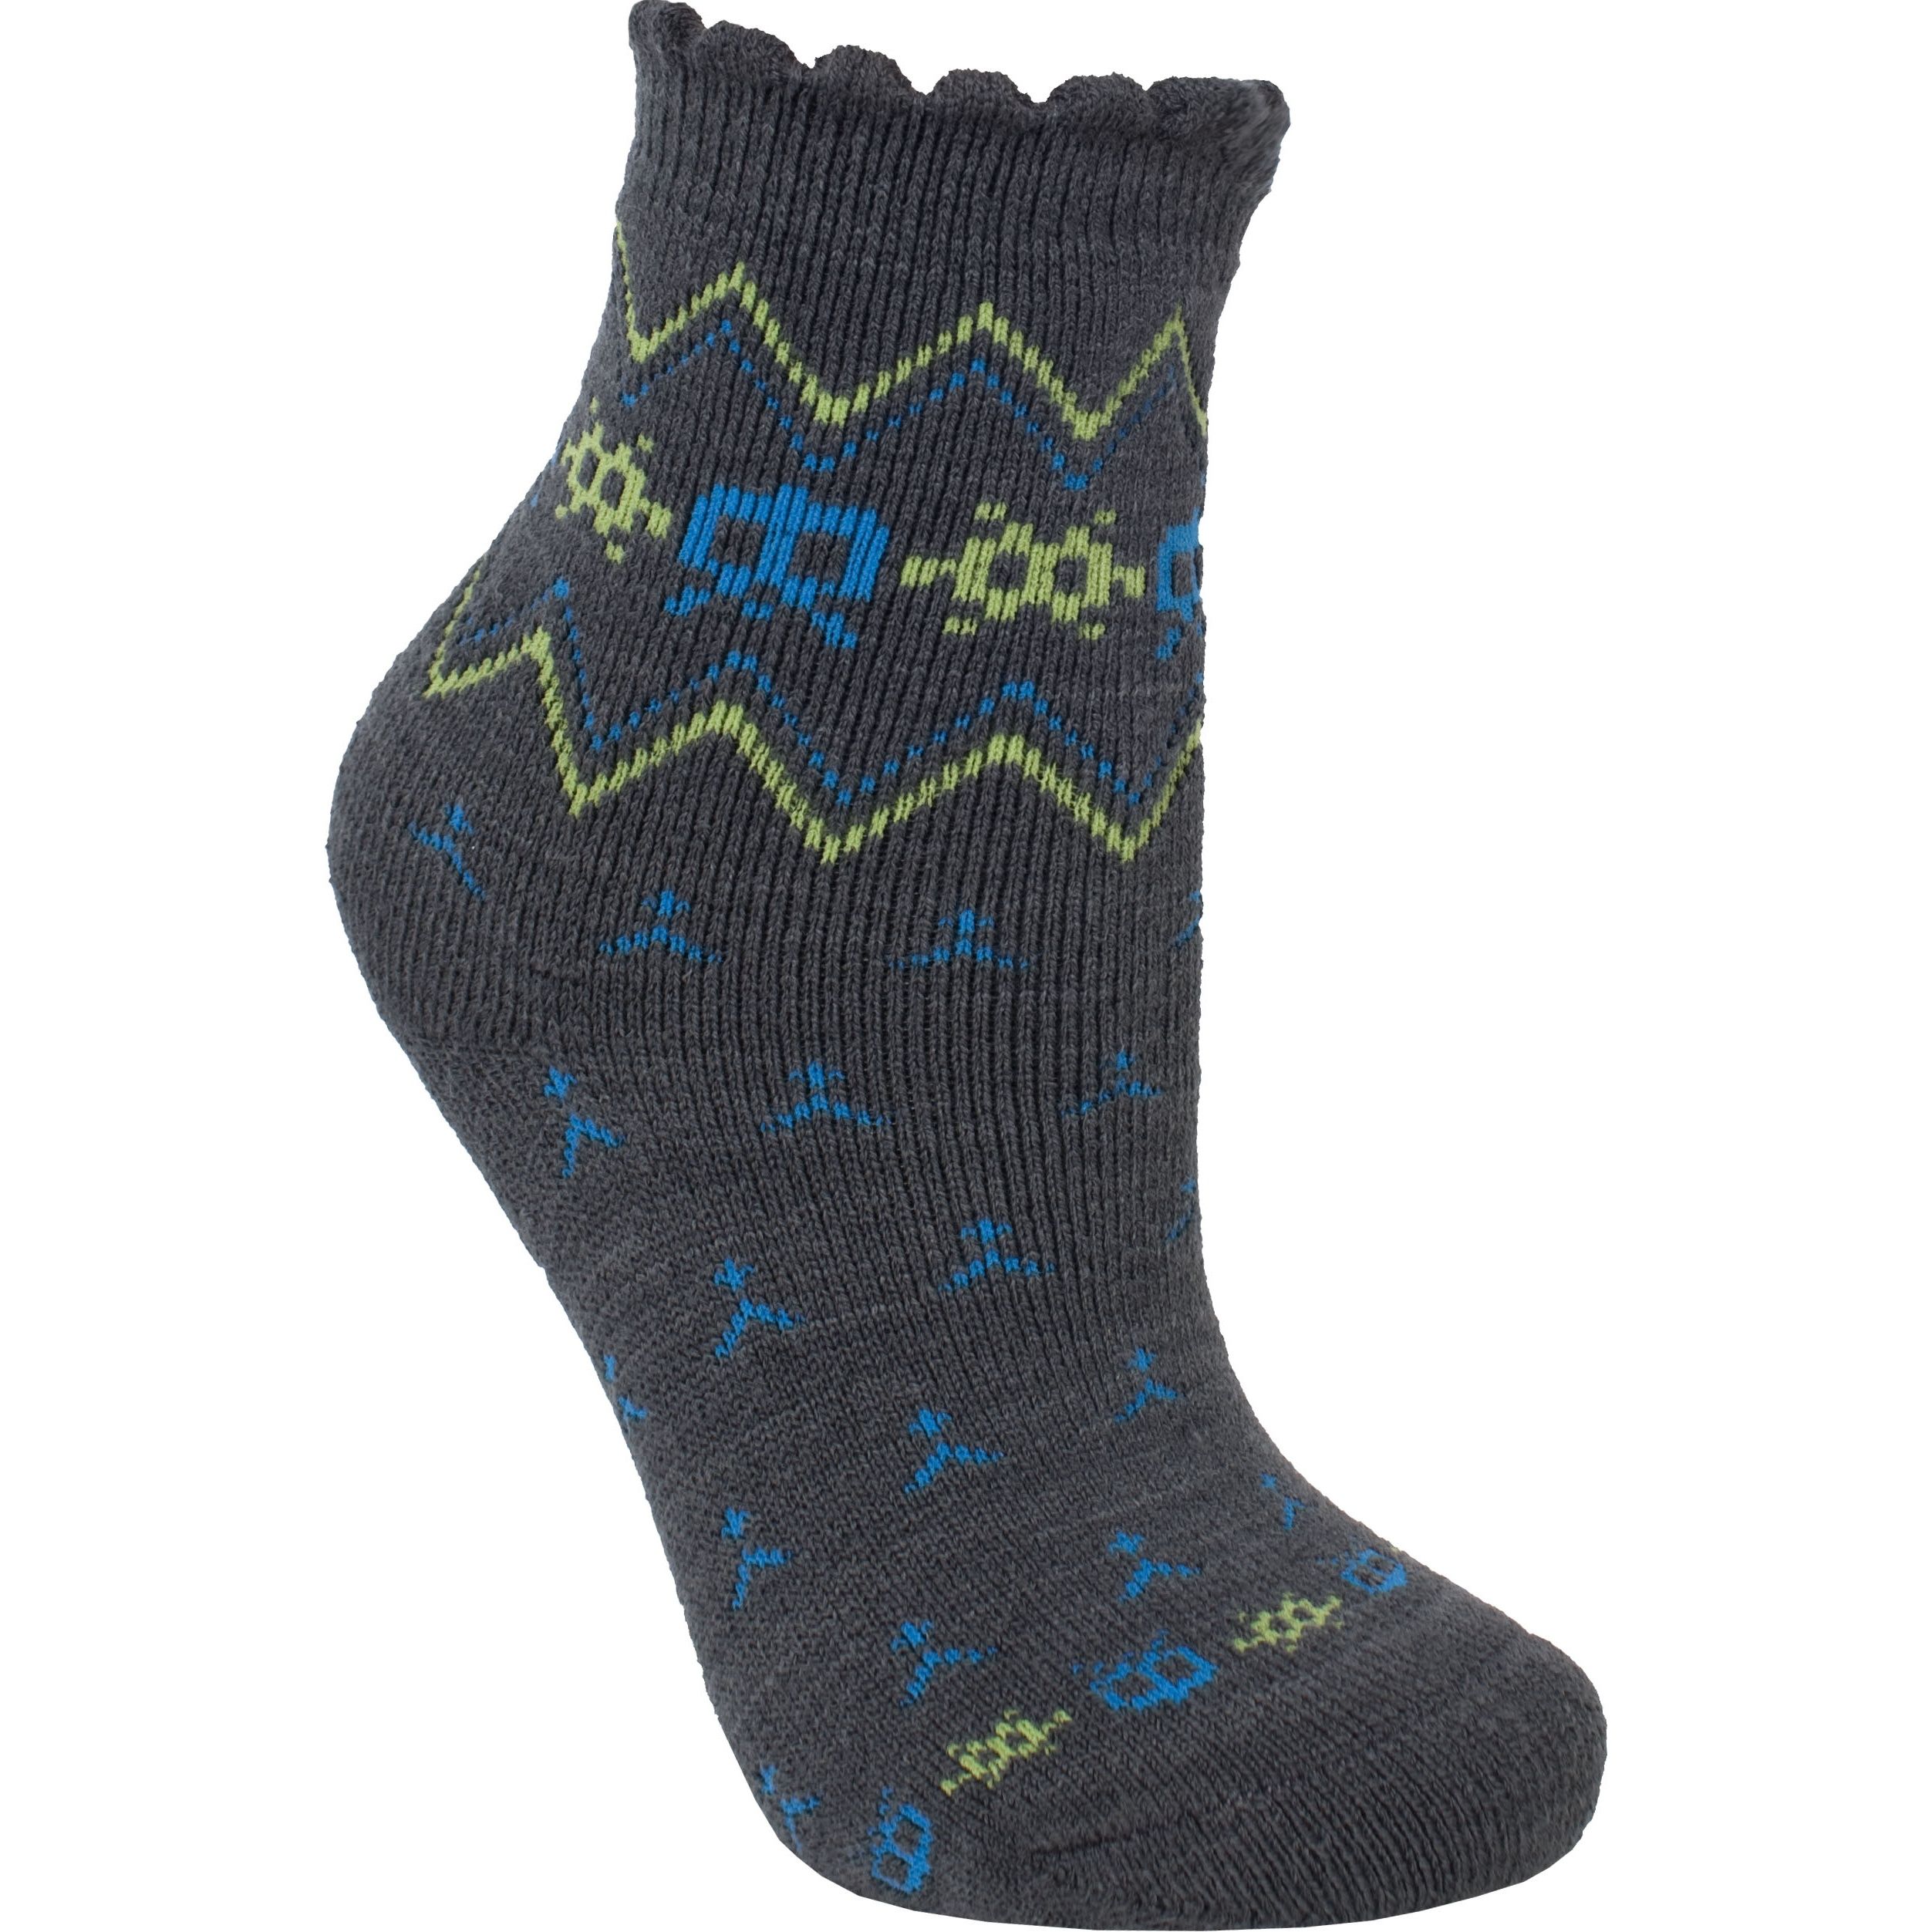 Kids patterned socks. 80% Acrylic, 5% Nylon, 14% Spandex, 1% Elastic.